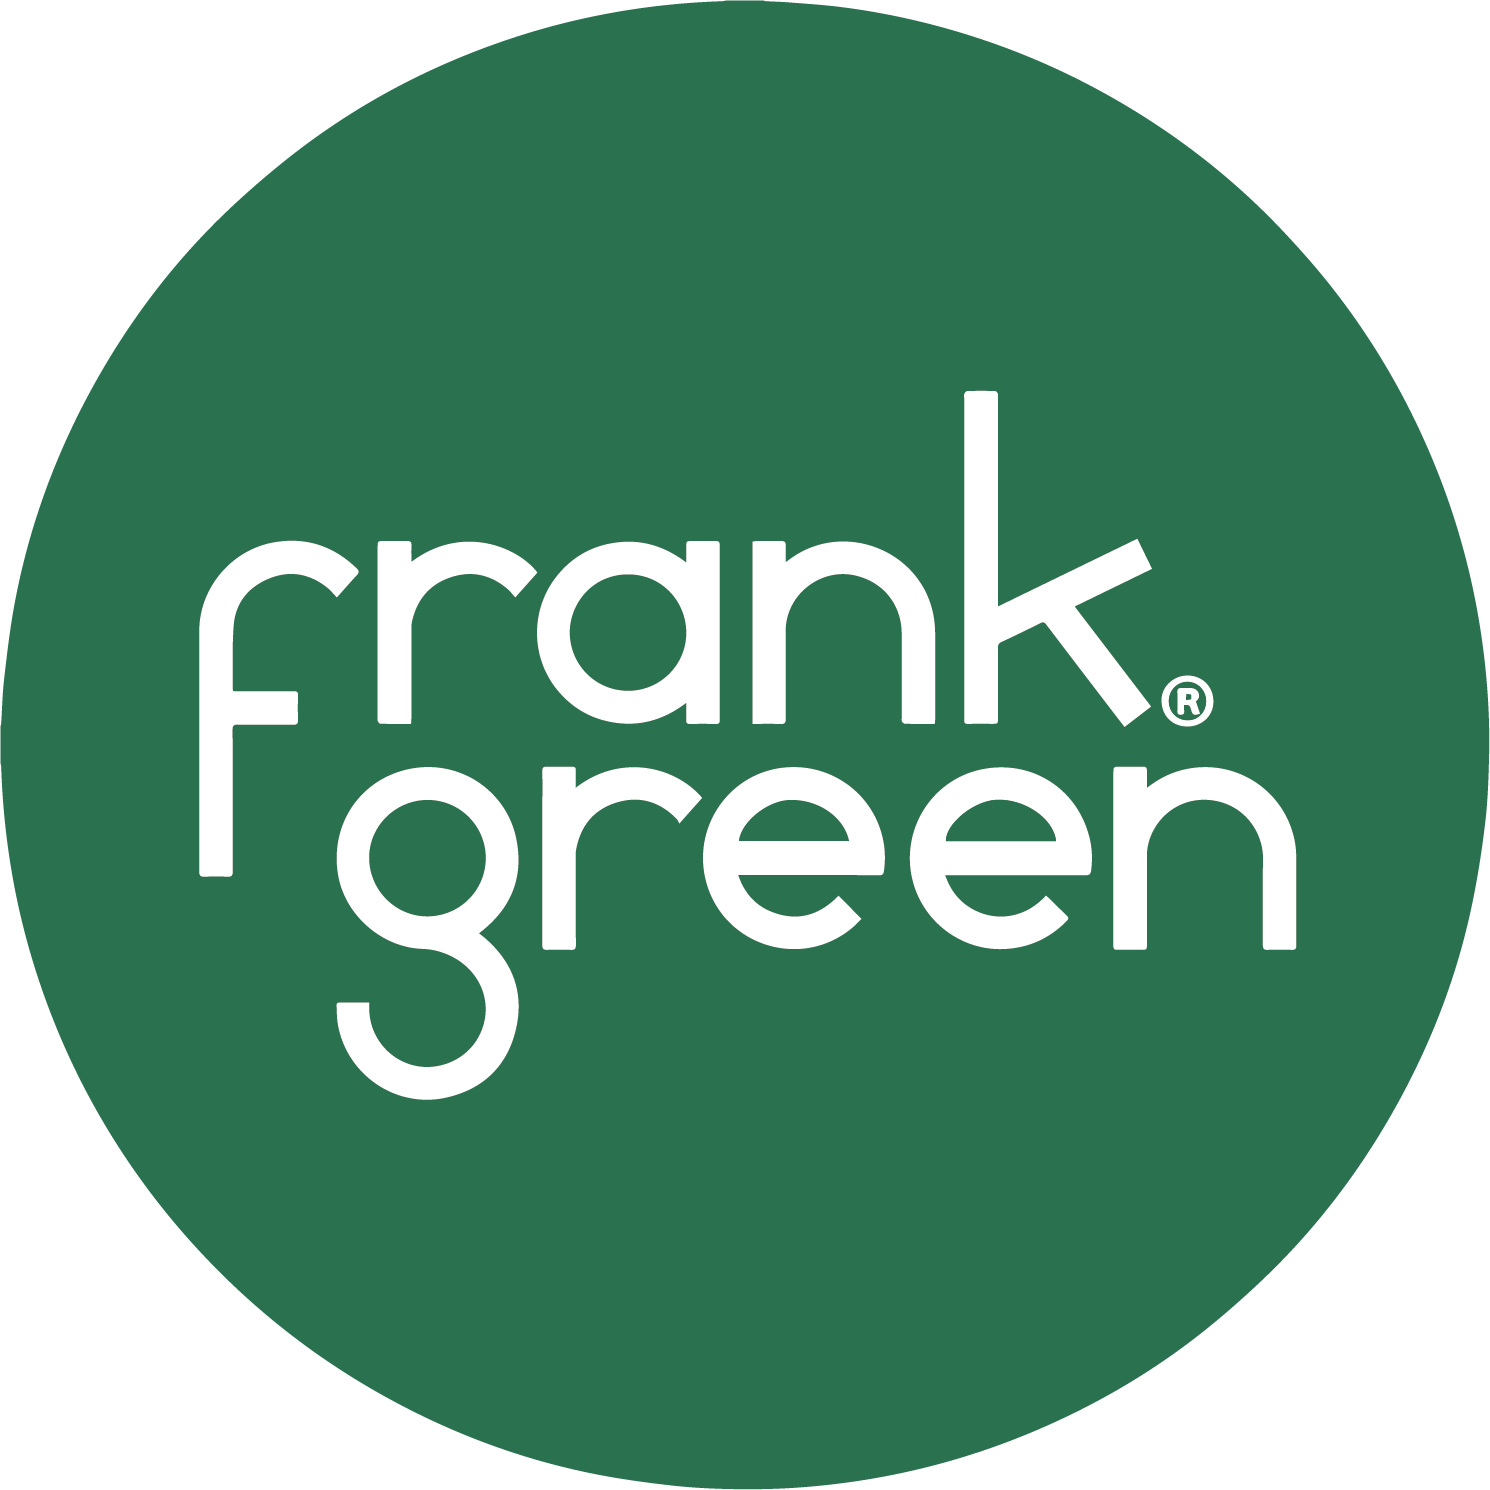 Frank Green Water Bottle, Facebook Marketplace